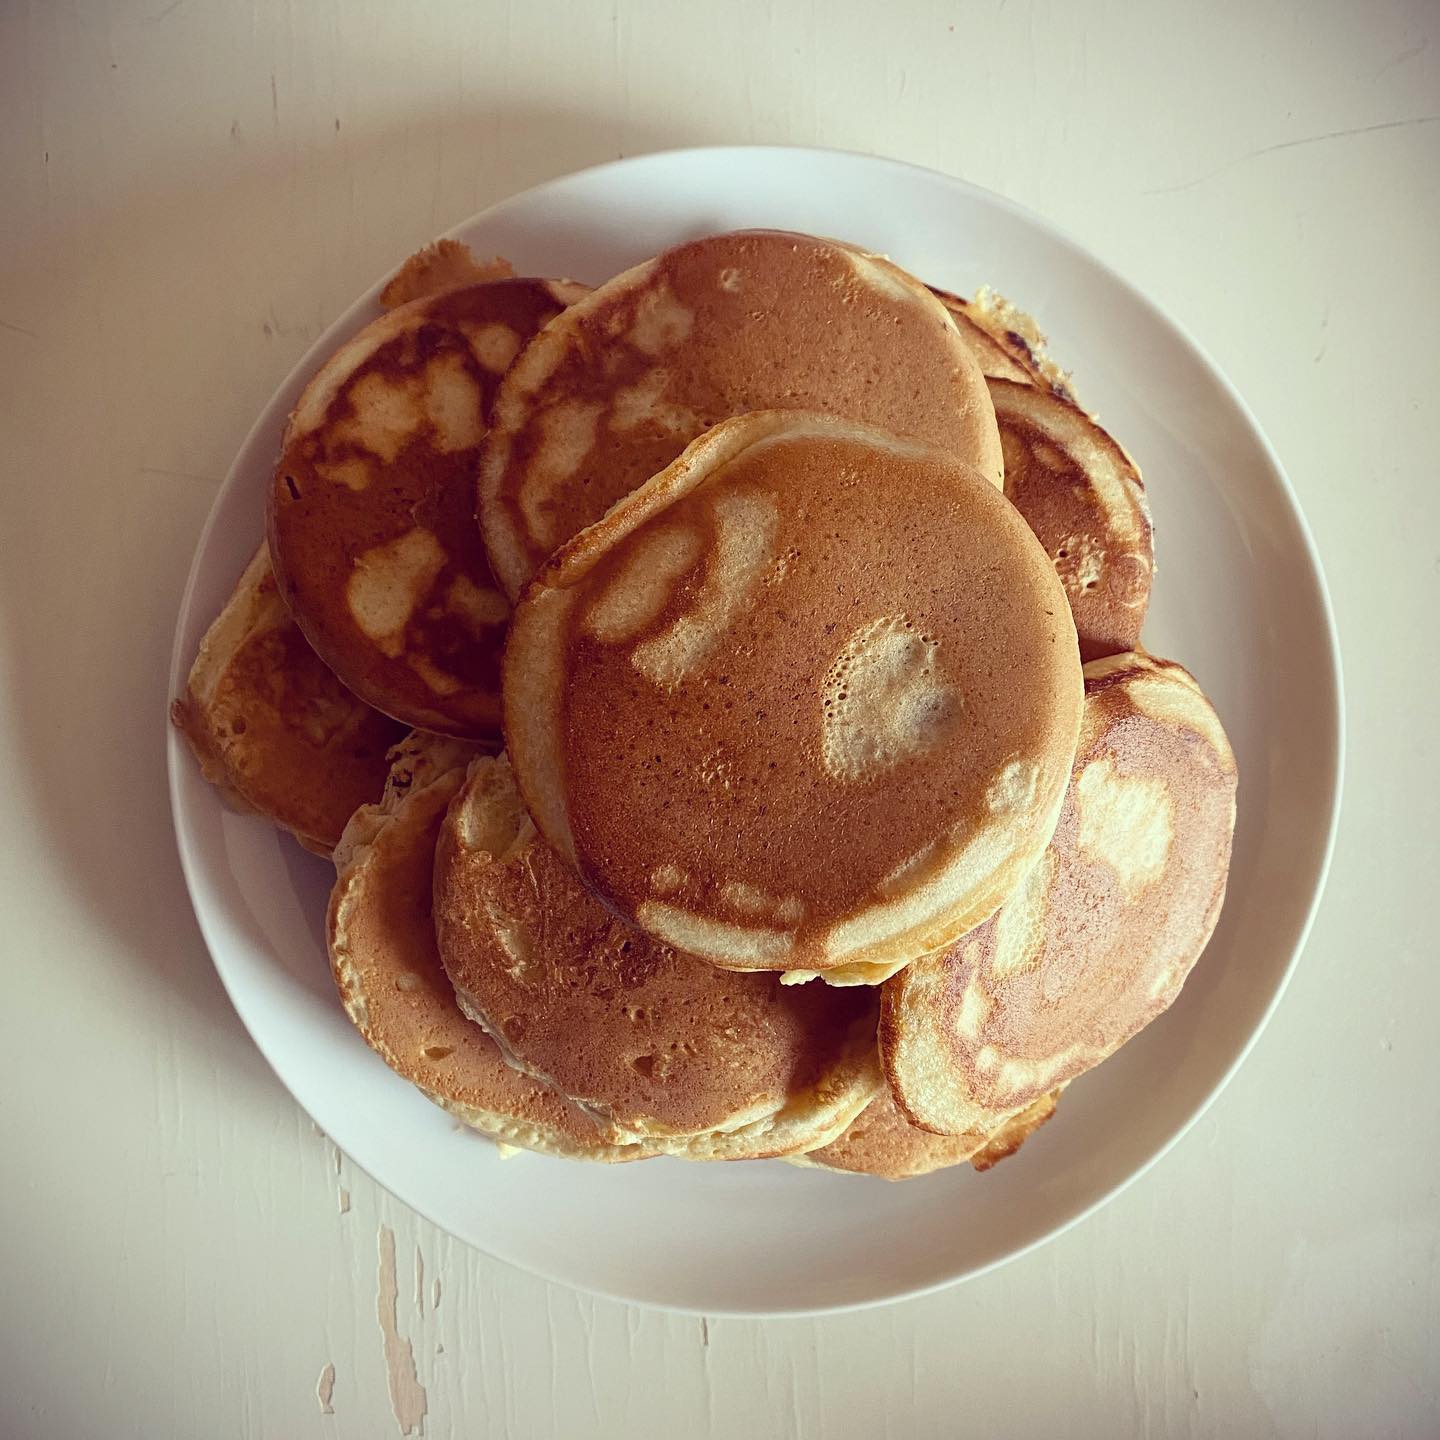 🥞❤️! Pancake-Love! Happy Sunday!
.
.
#pancakes #sunntigszmorge #🥞